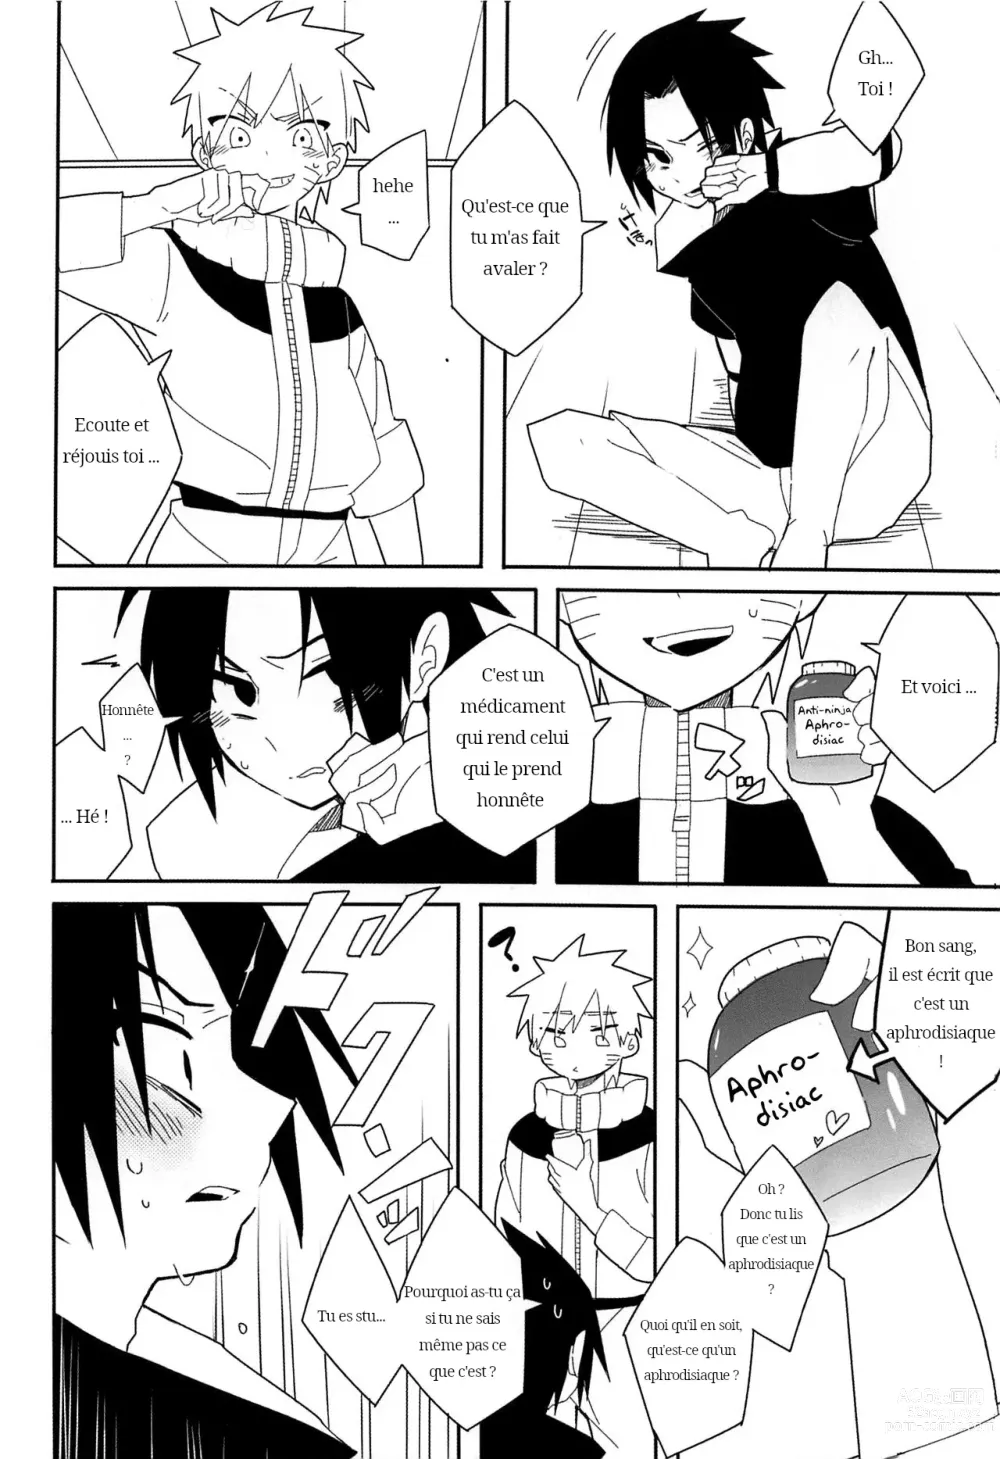 Page 7 of doujinshi Break through